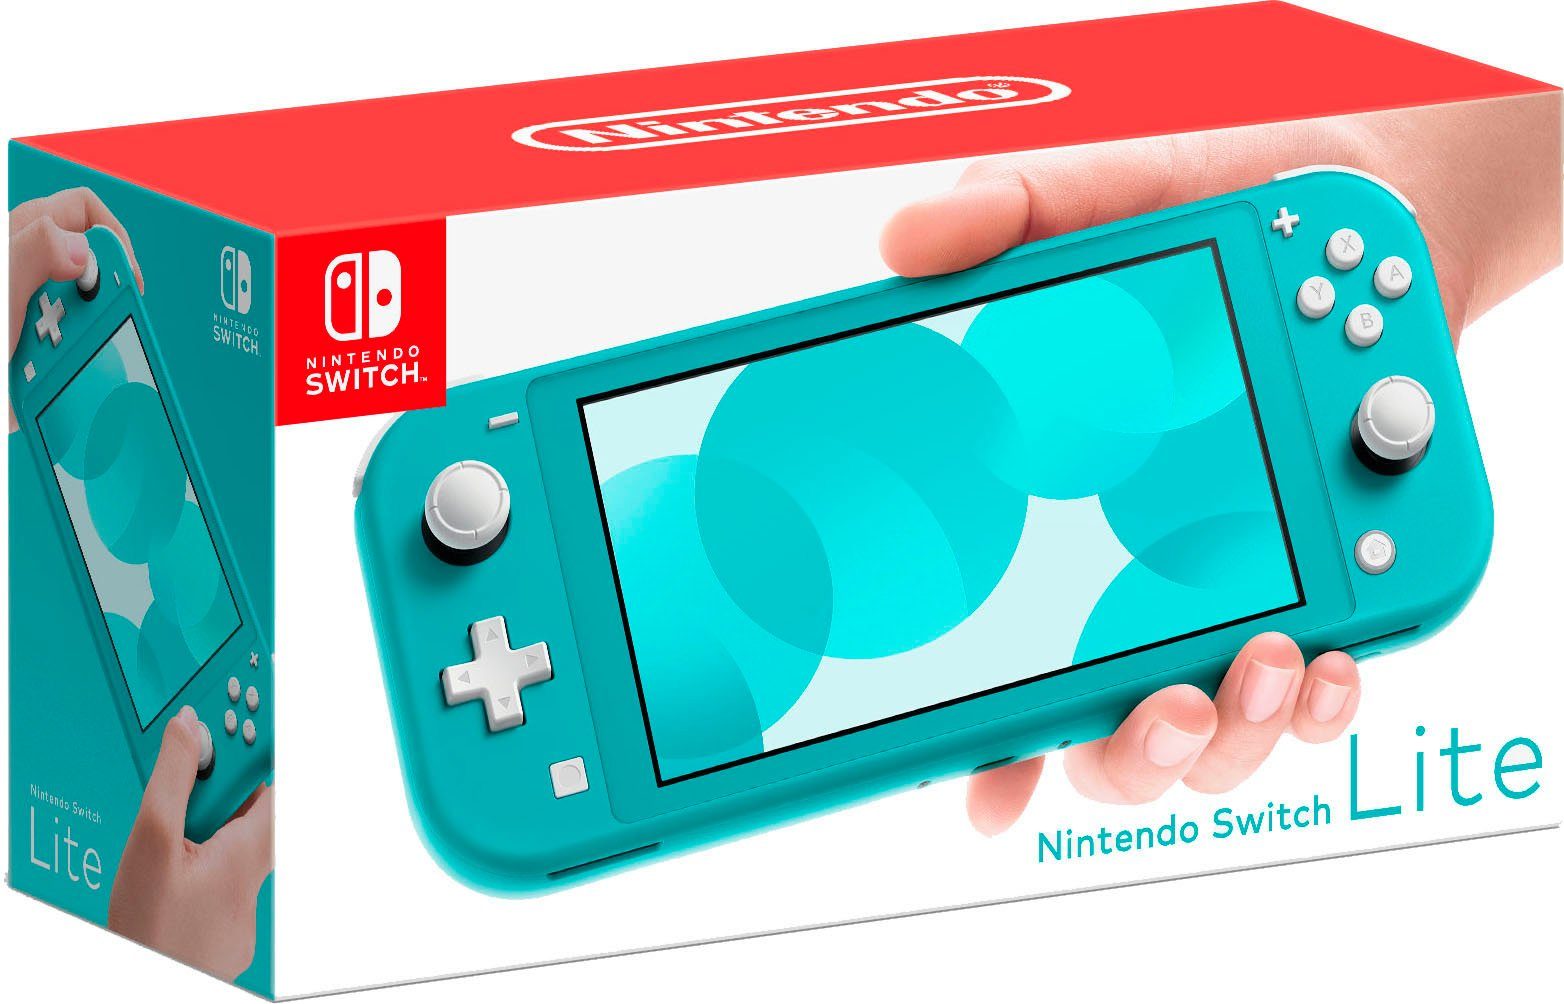 Nintendo Switch Lite, inkl. Animal Crossing kaufen | OTTO